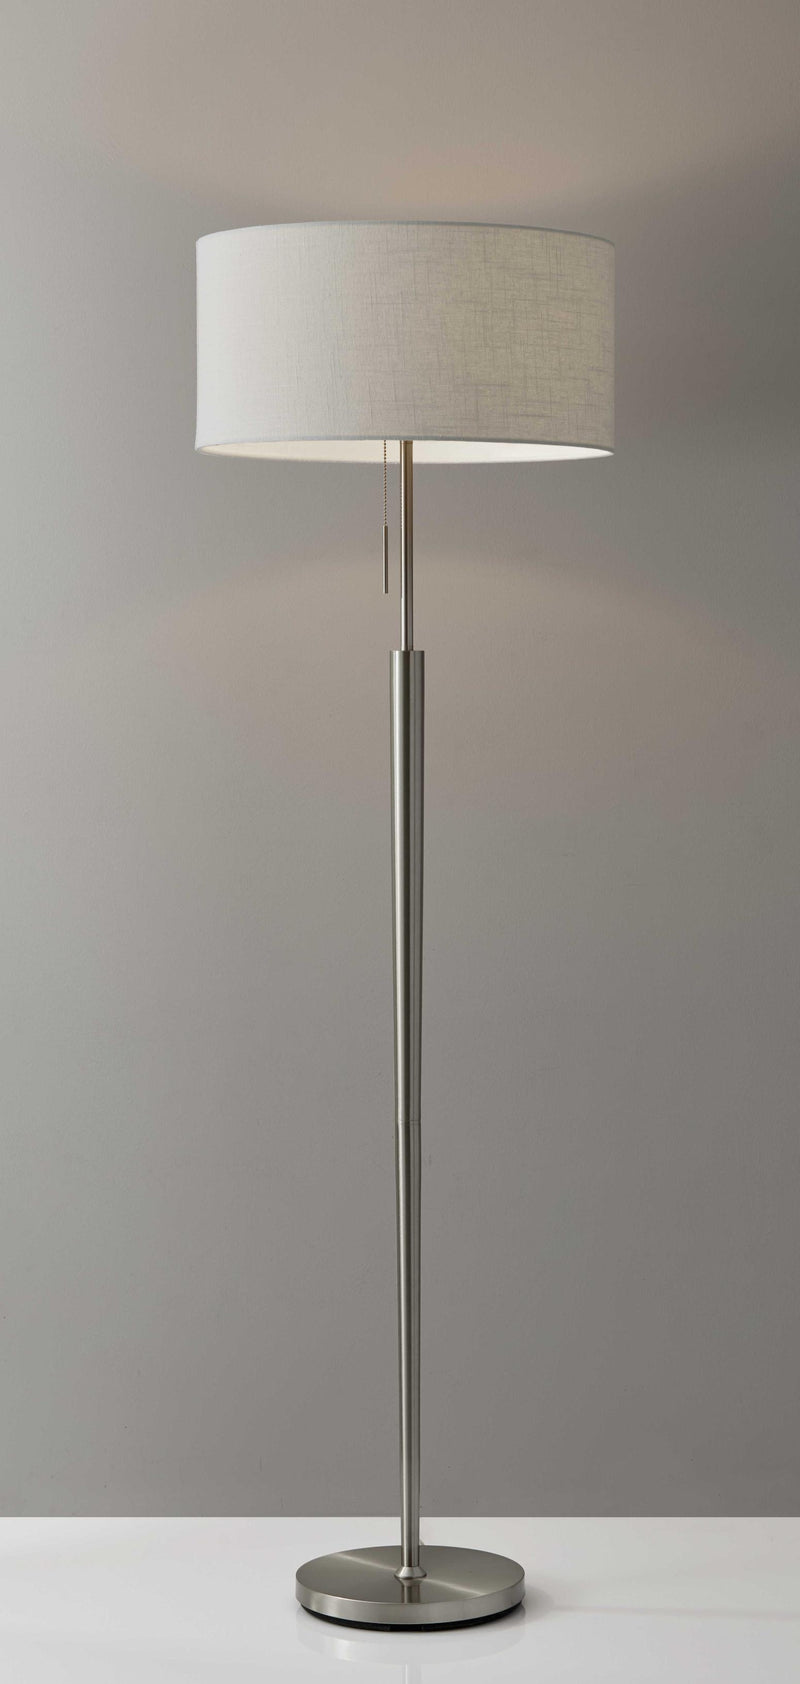 19" X 11" X 65" Brushed Steel Metal Floor Lamp